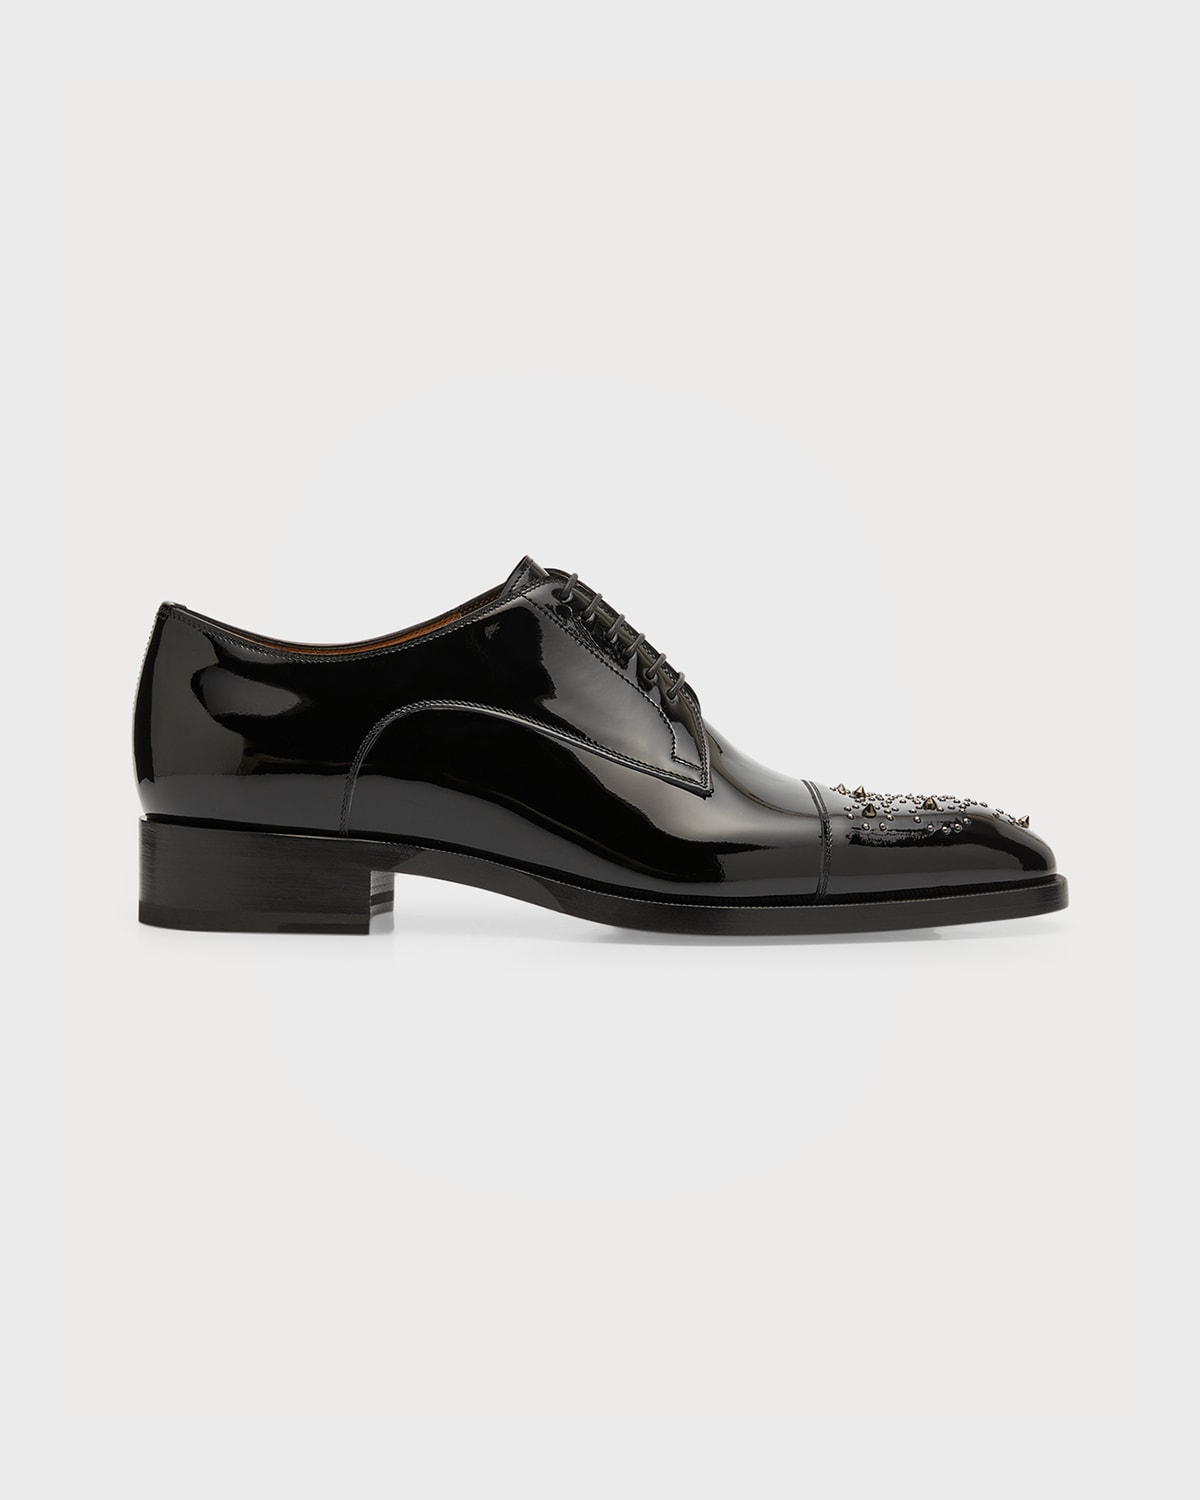 Christian Louboutin Men's Greggo Patent Leather Oxford Shoes 